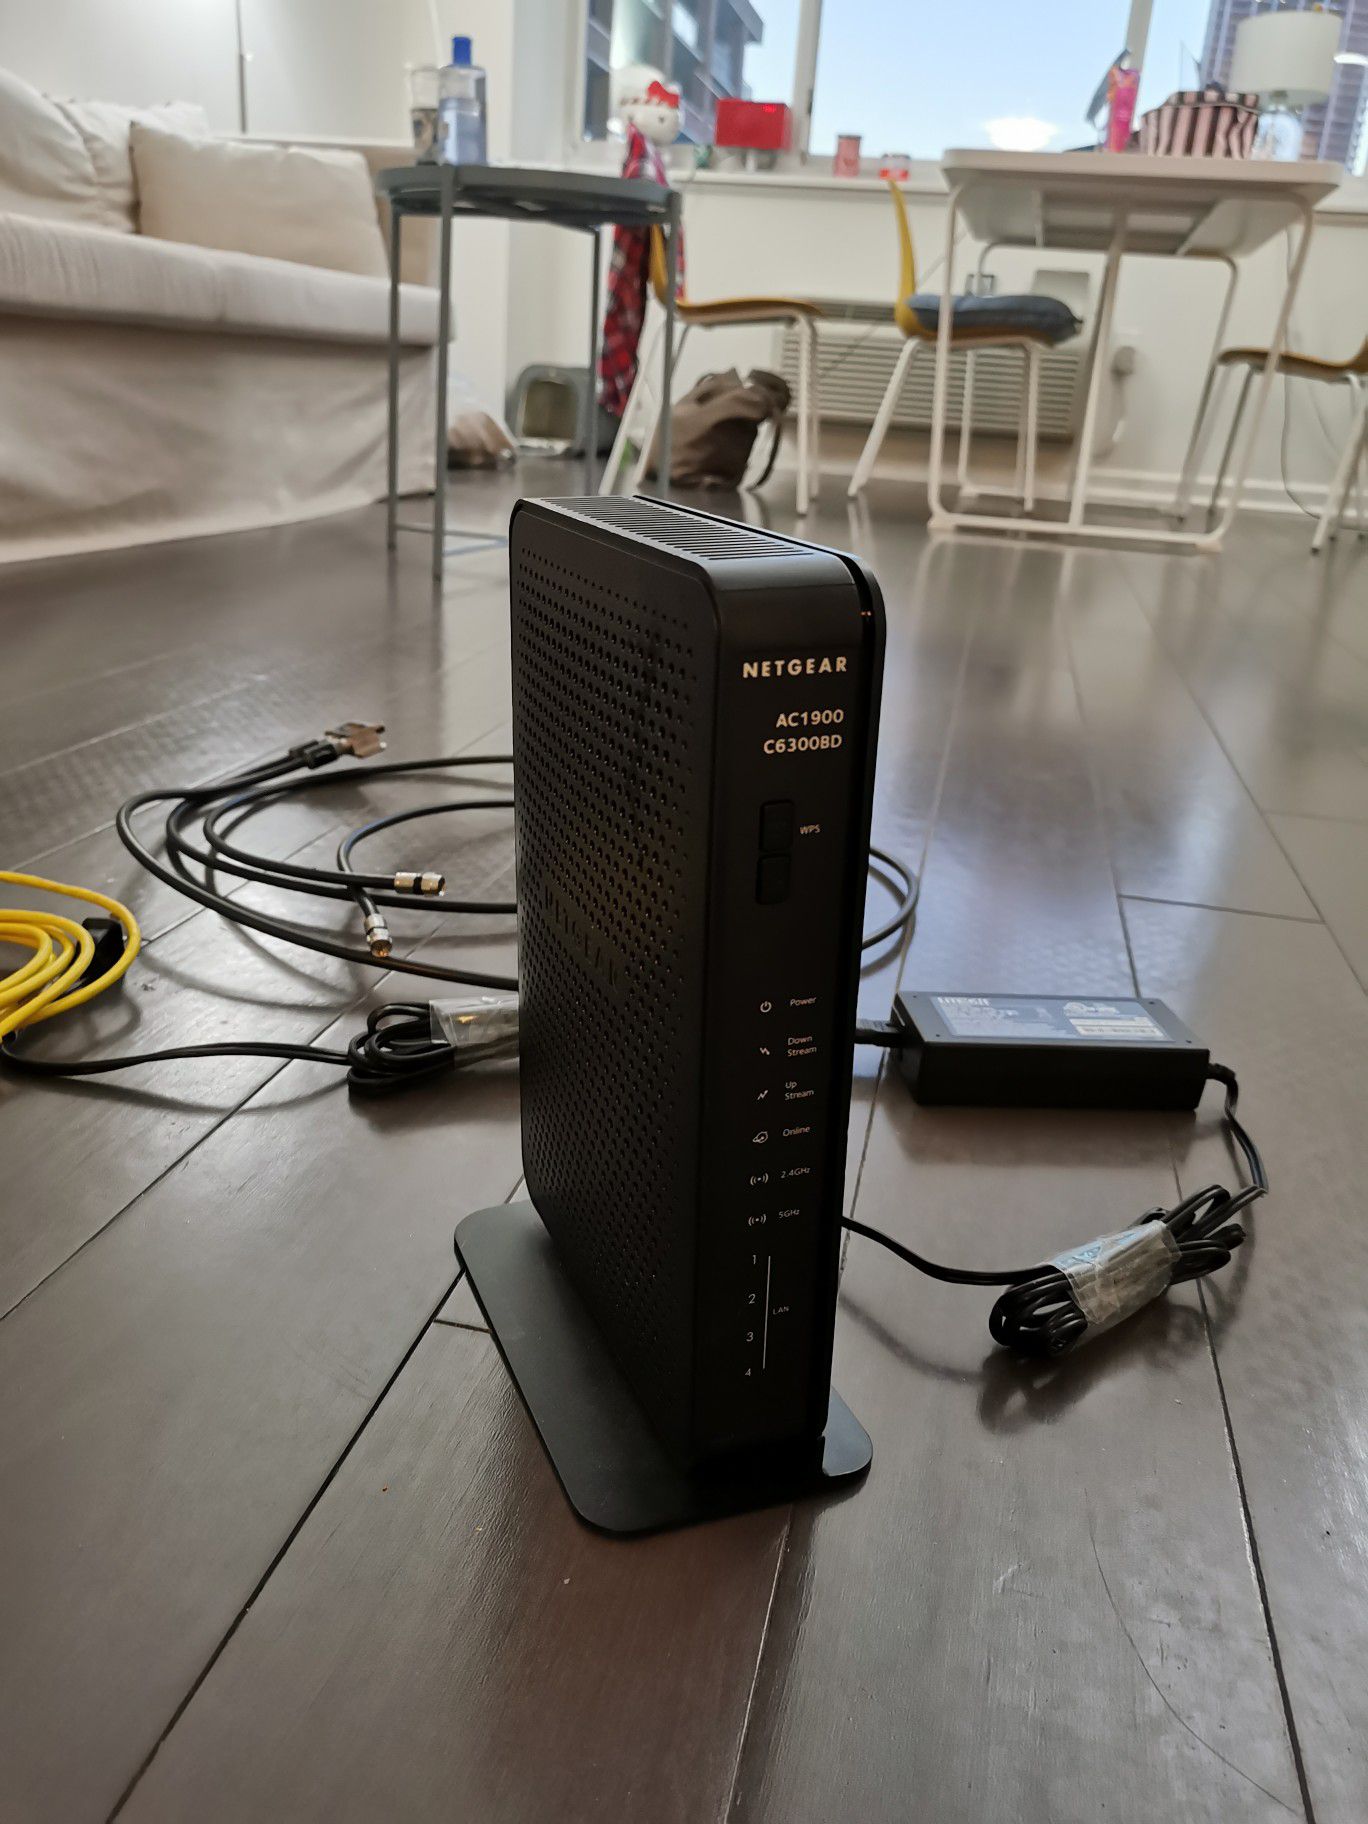 Netgear WIFI cable modem C6300BD